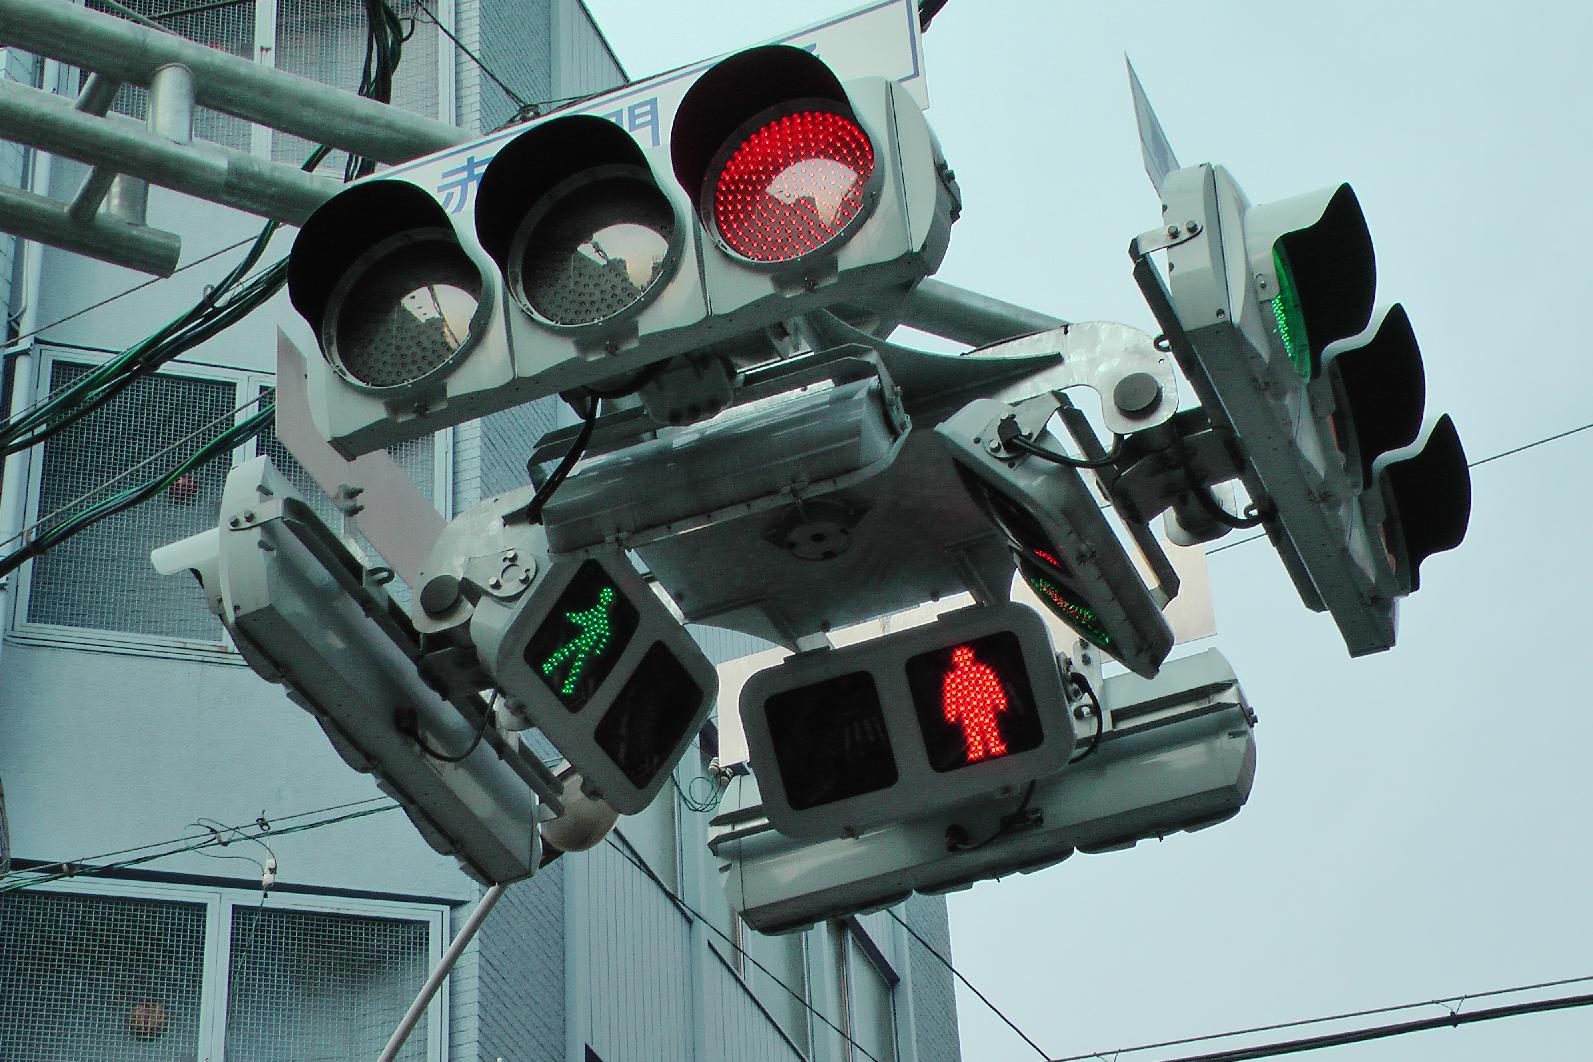 the most futuristic traffic light I've seen so far in Japan